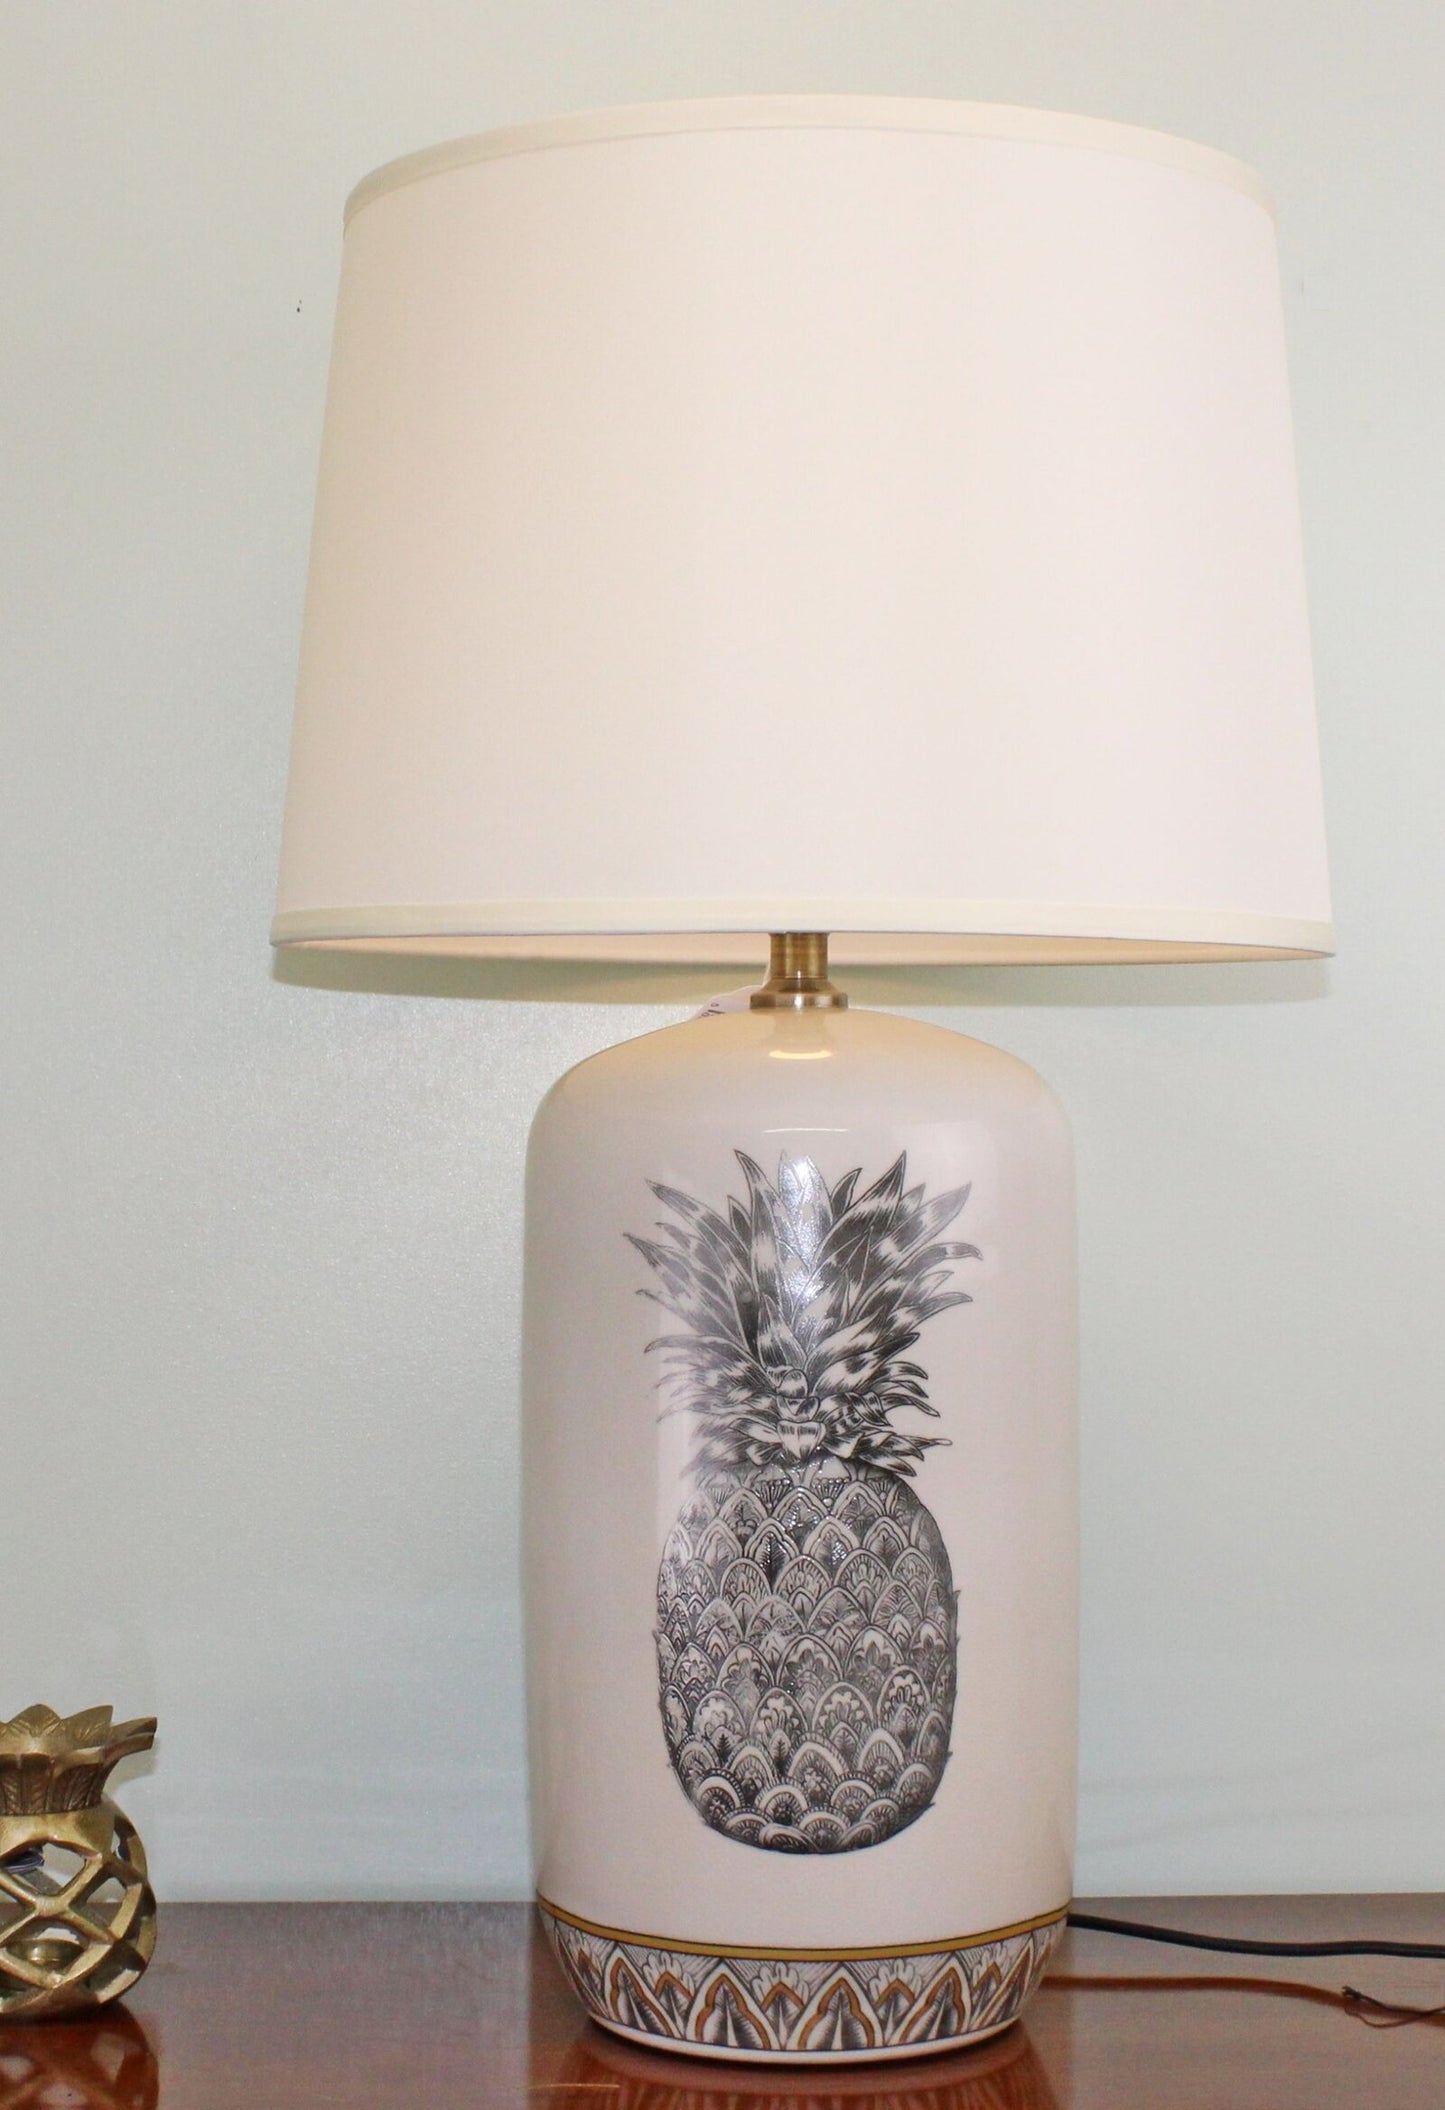 Black & White Ceramic Lamp with Pineapple Design 69cm